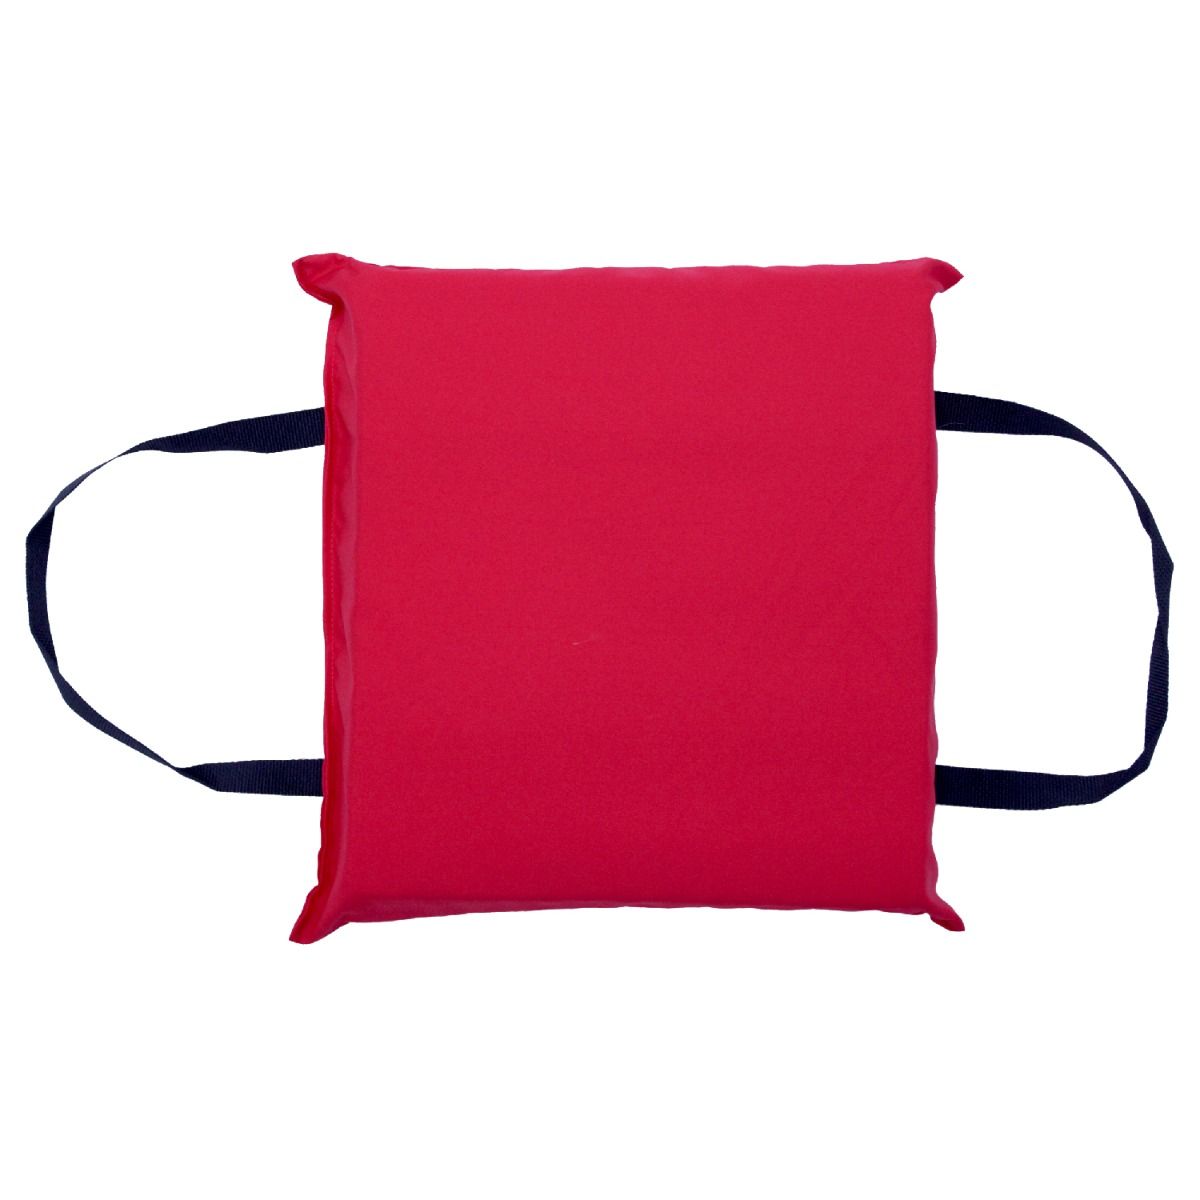 Kemp USA Throwable Flotation Foam Cushion, USGC Approved, Red